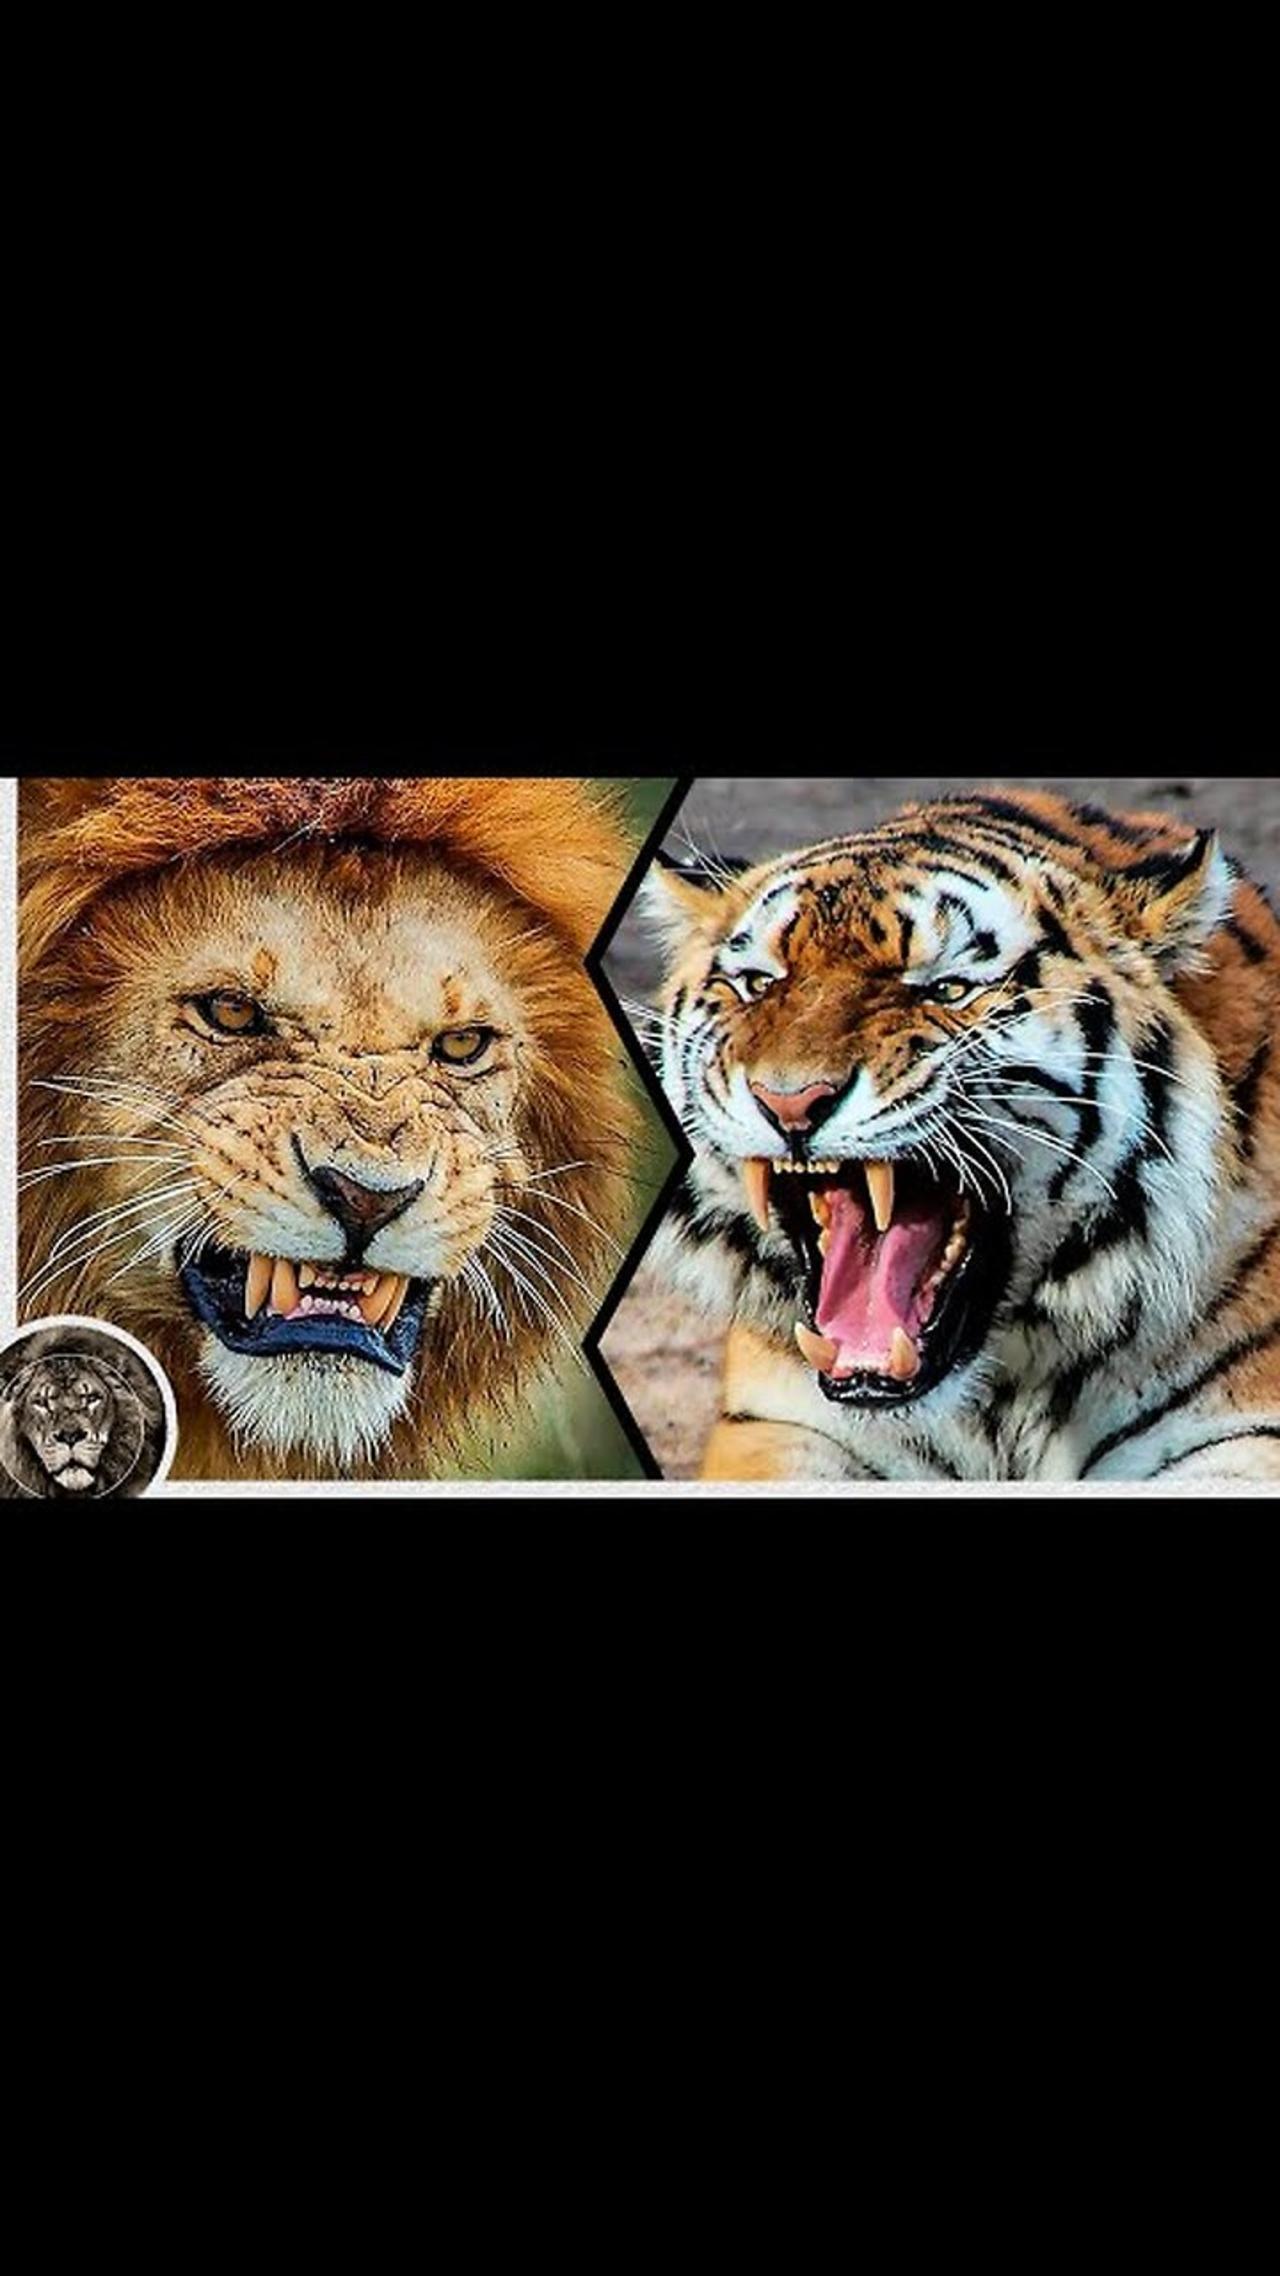 6 Tigers vs 1 Male Lion 🥲🥲